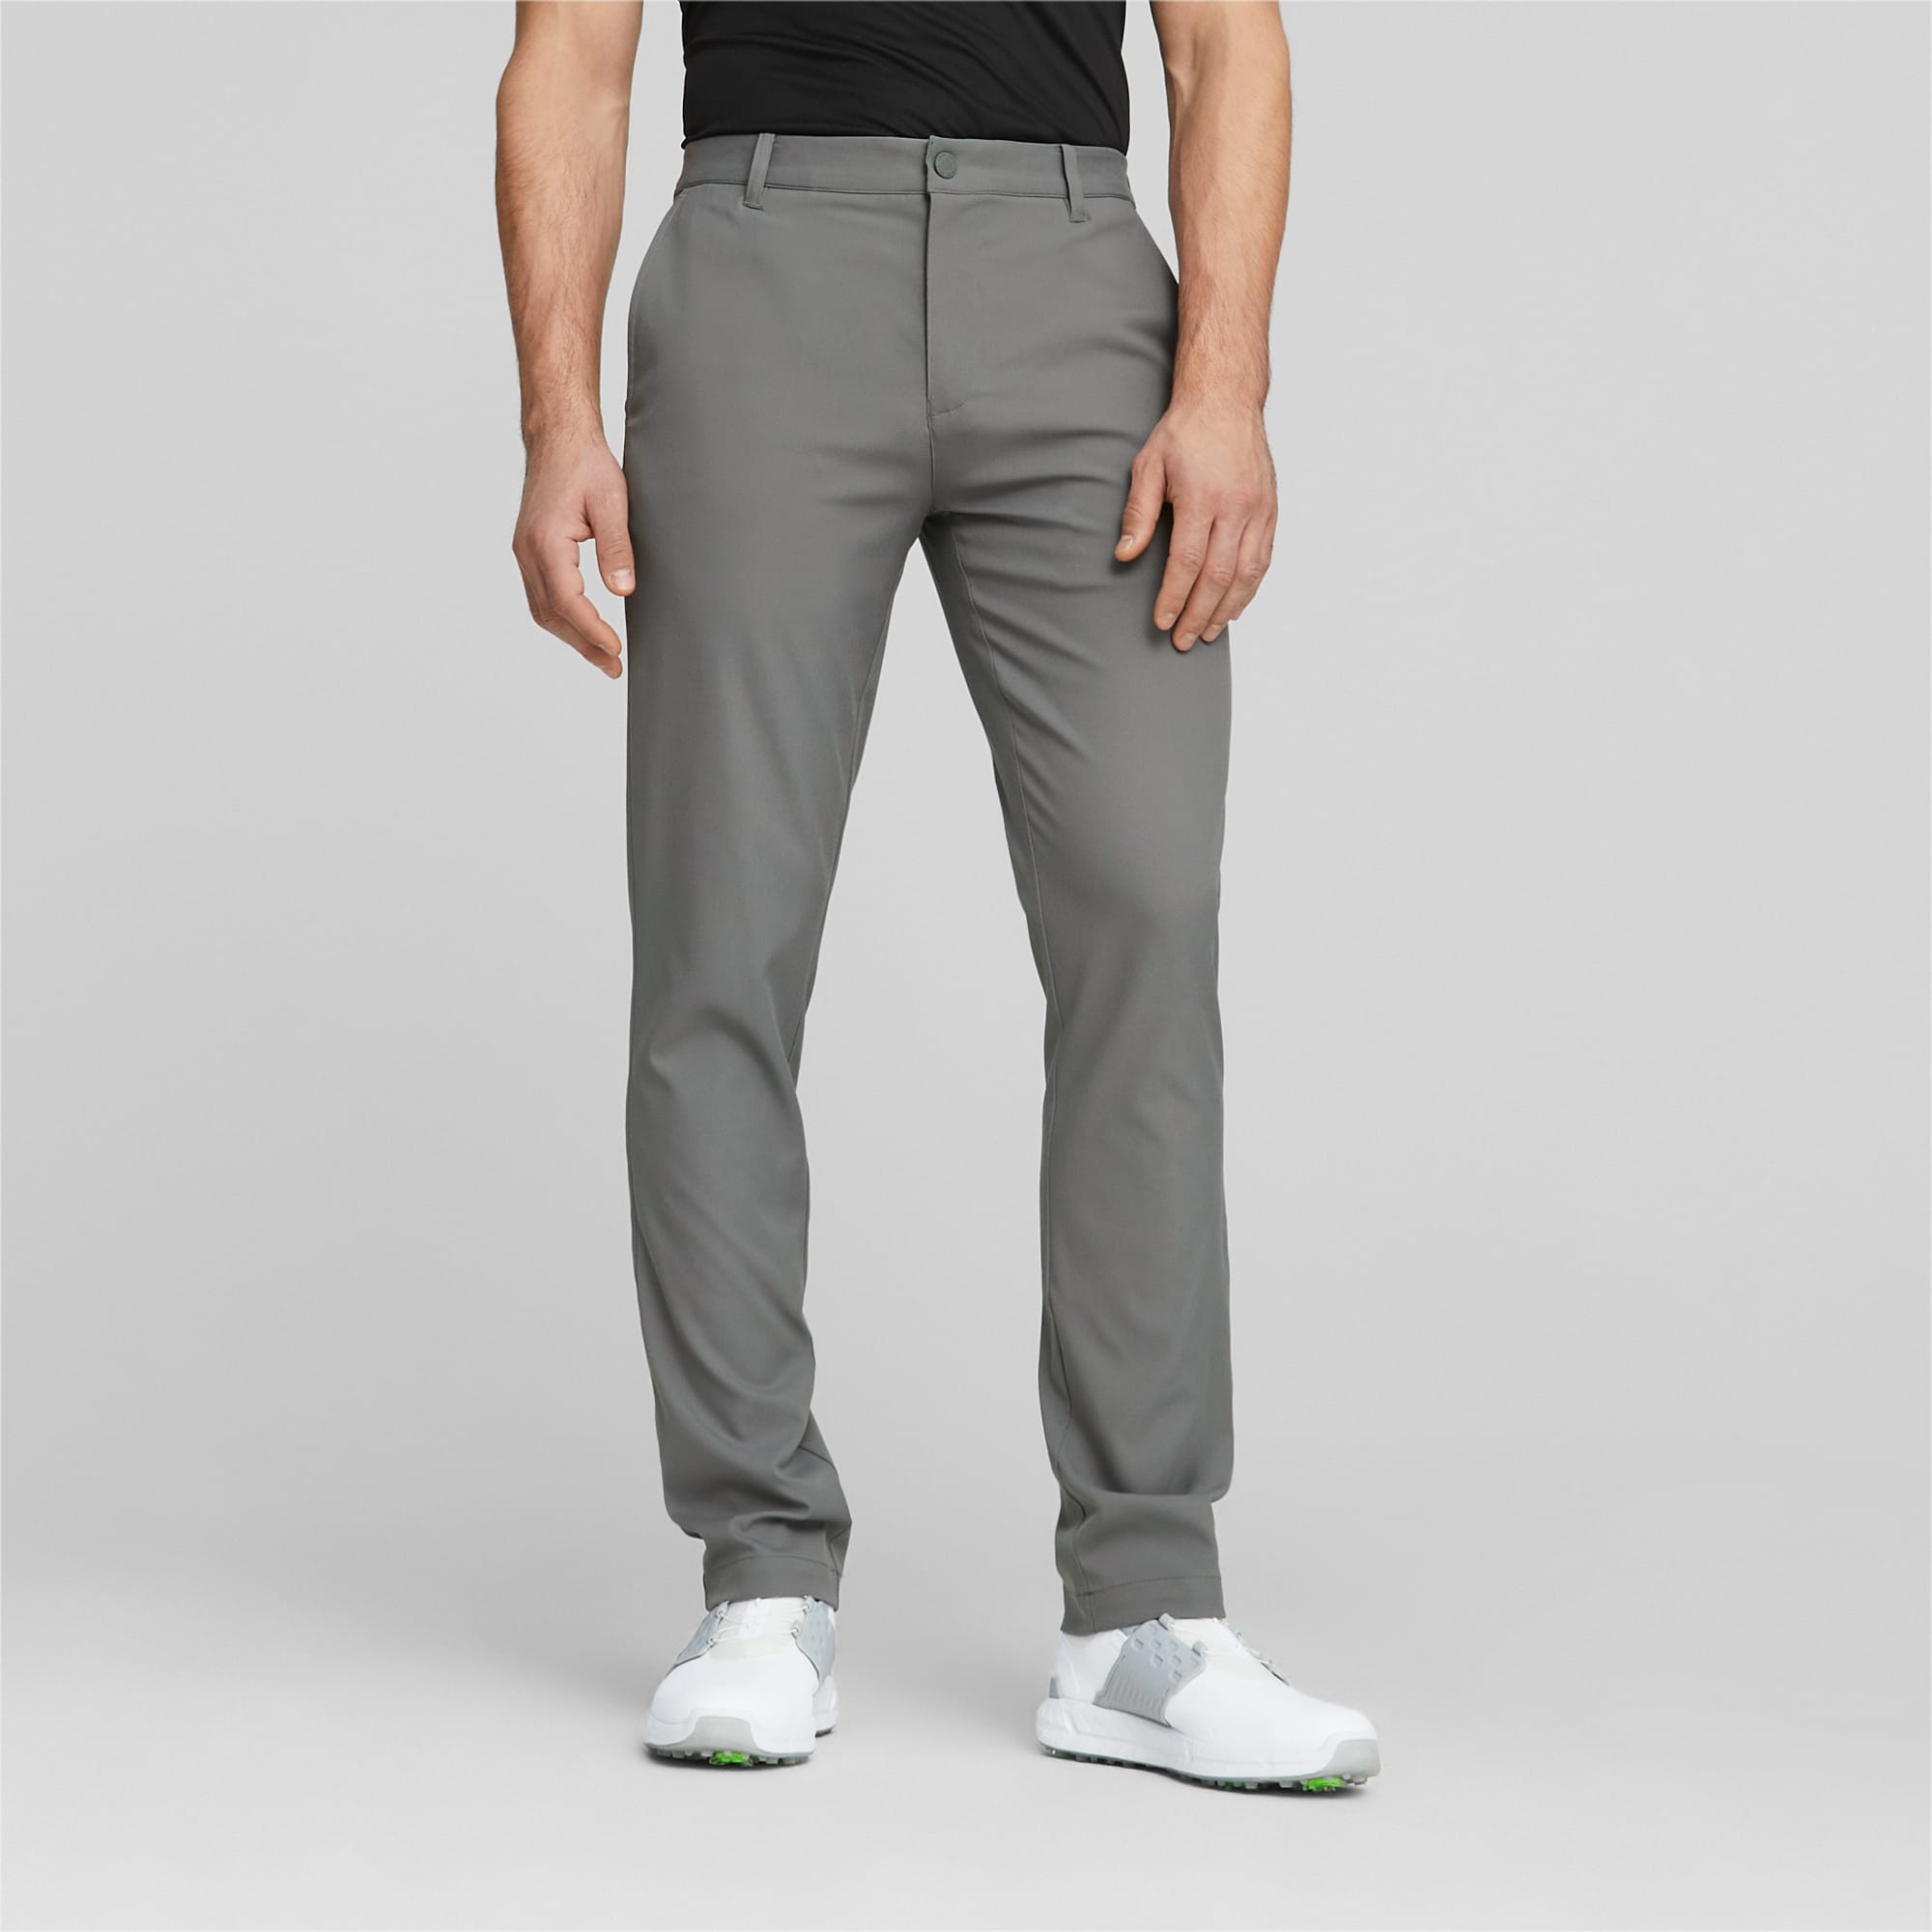 PUMA Dealer Tailored Golf Pants Men, Slate Sky, Size 38/34, Clothing